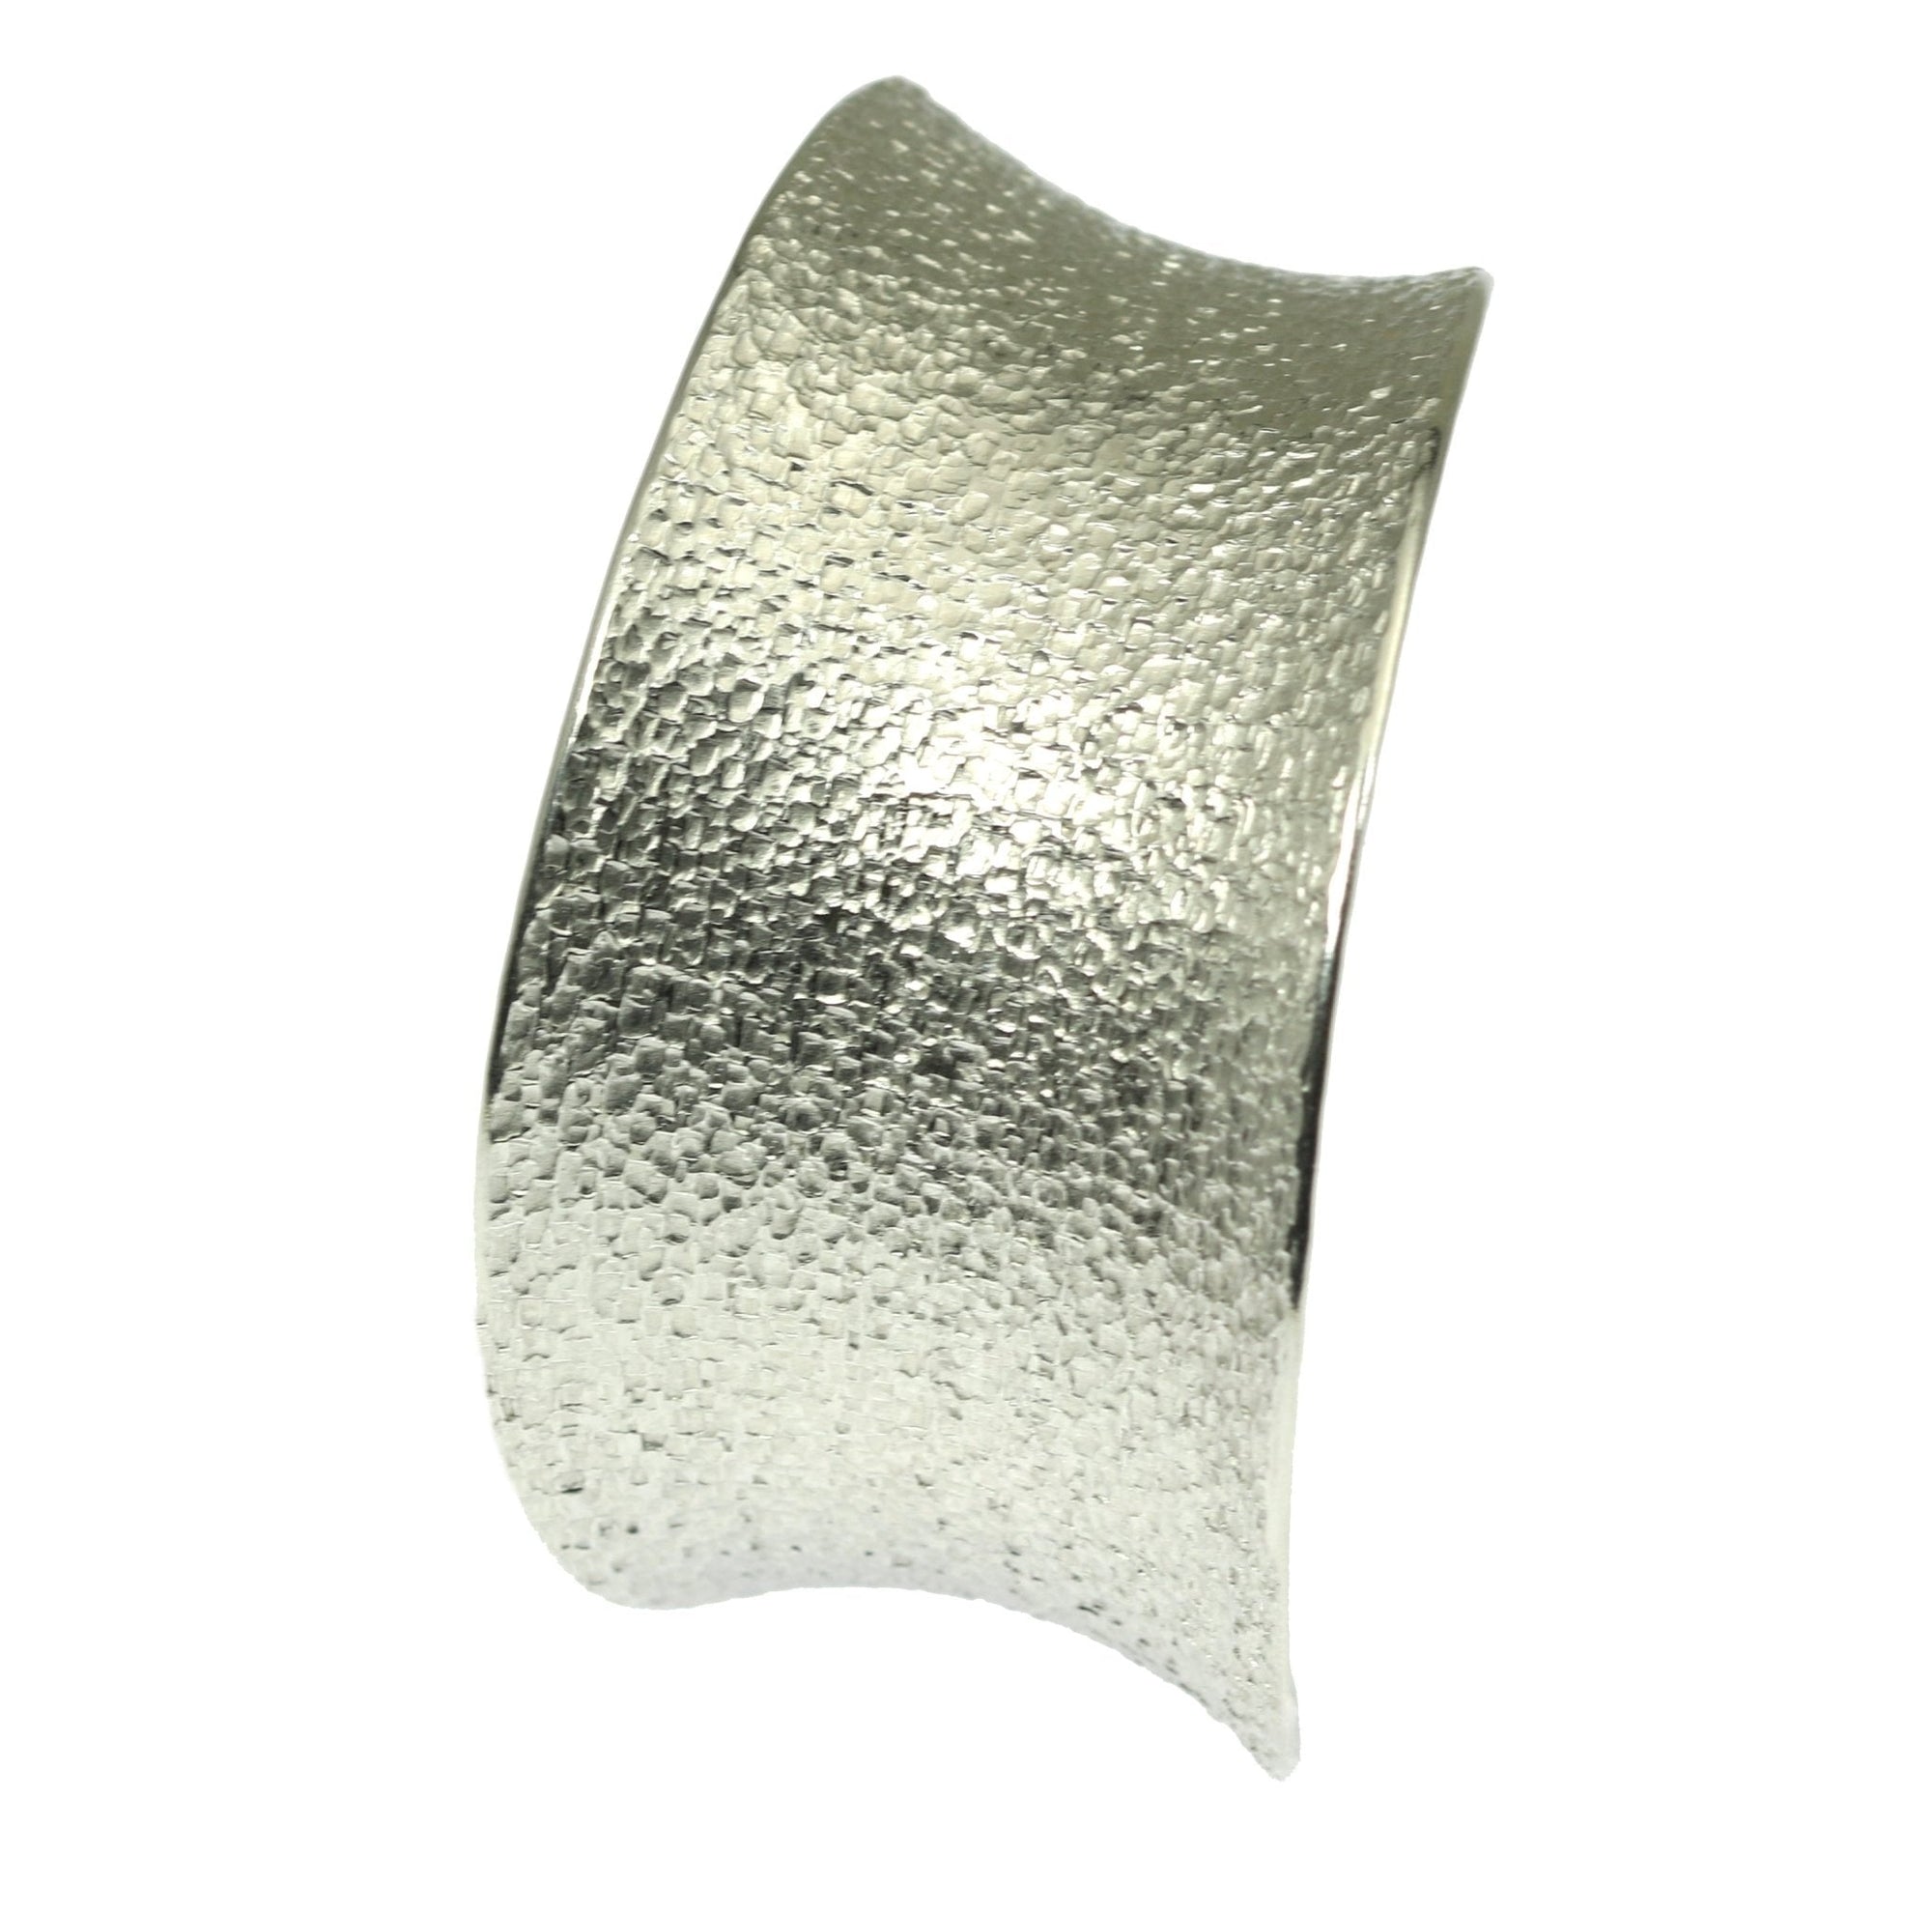 Detail of Texturized Aluminum Anticlastic Bangle